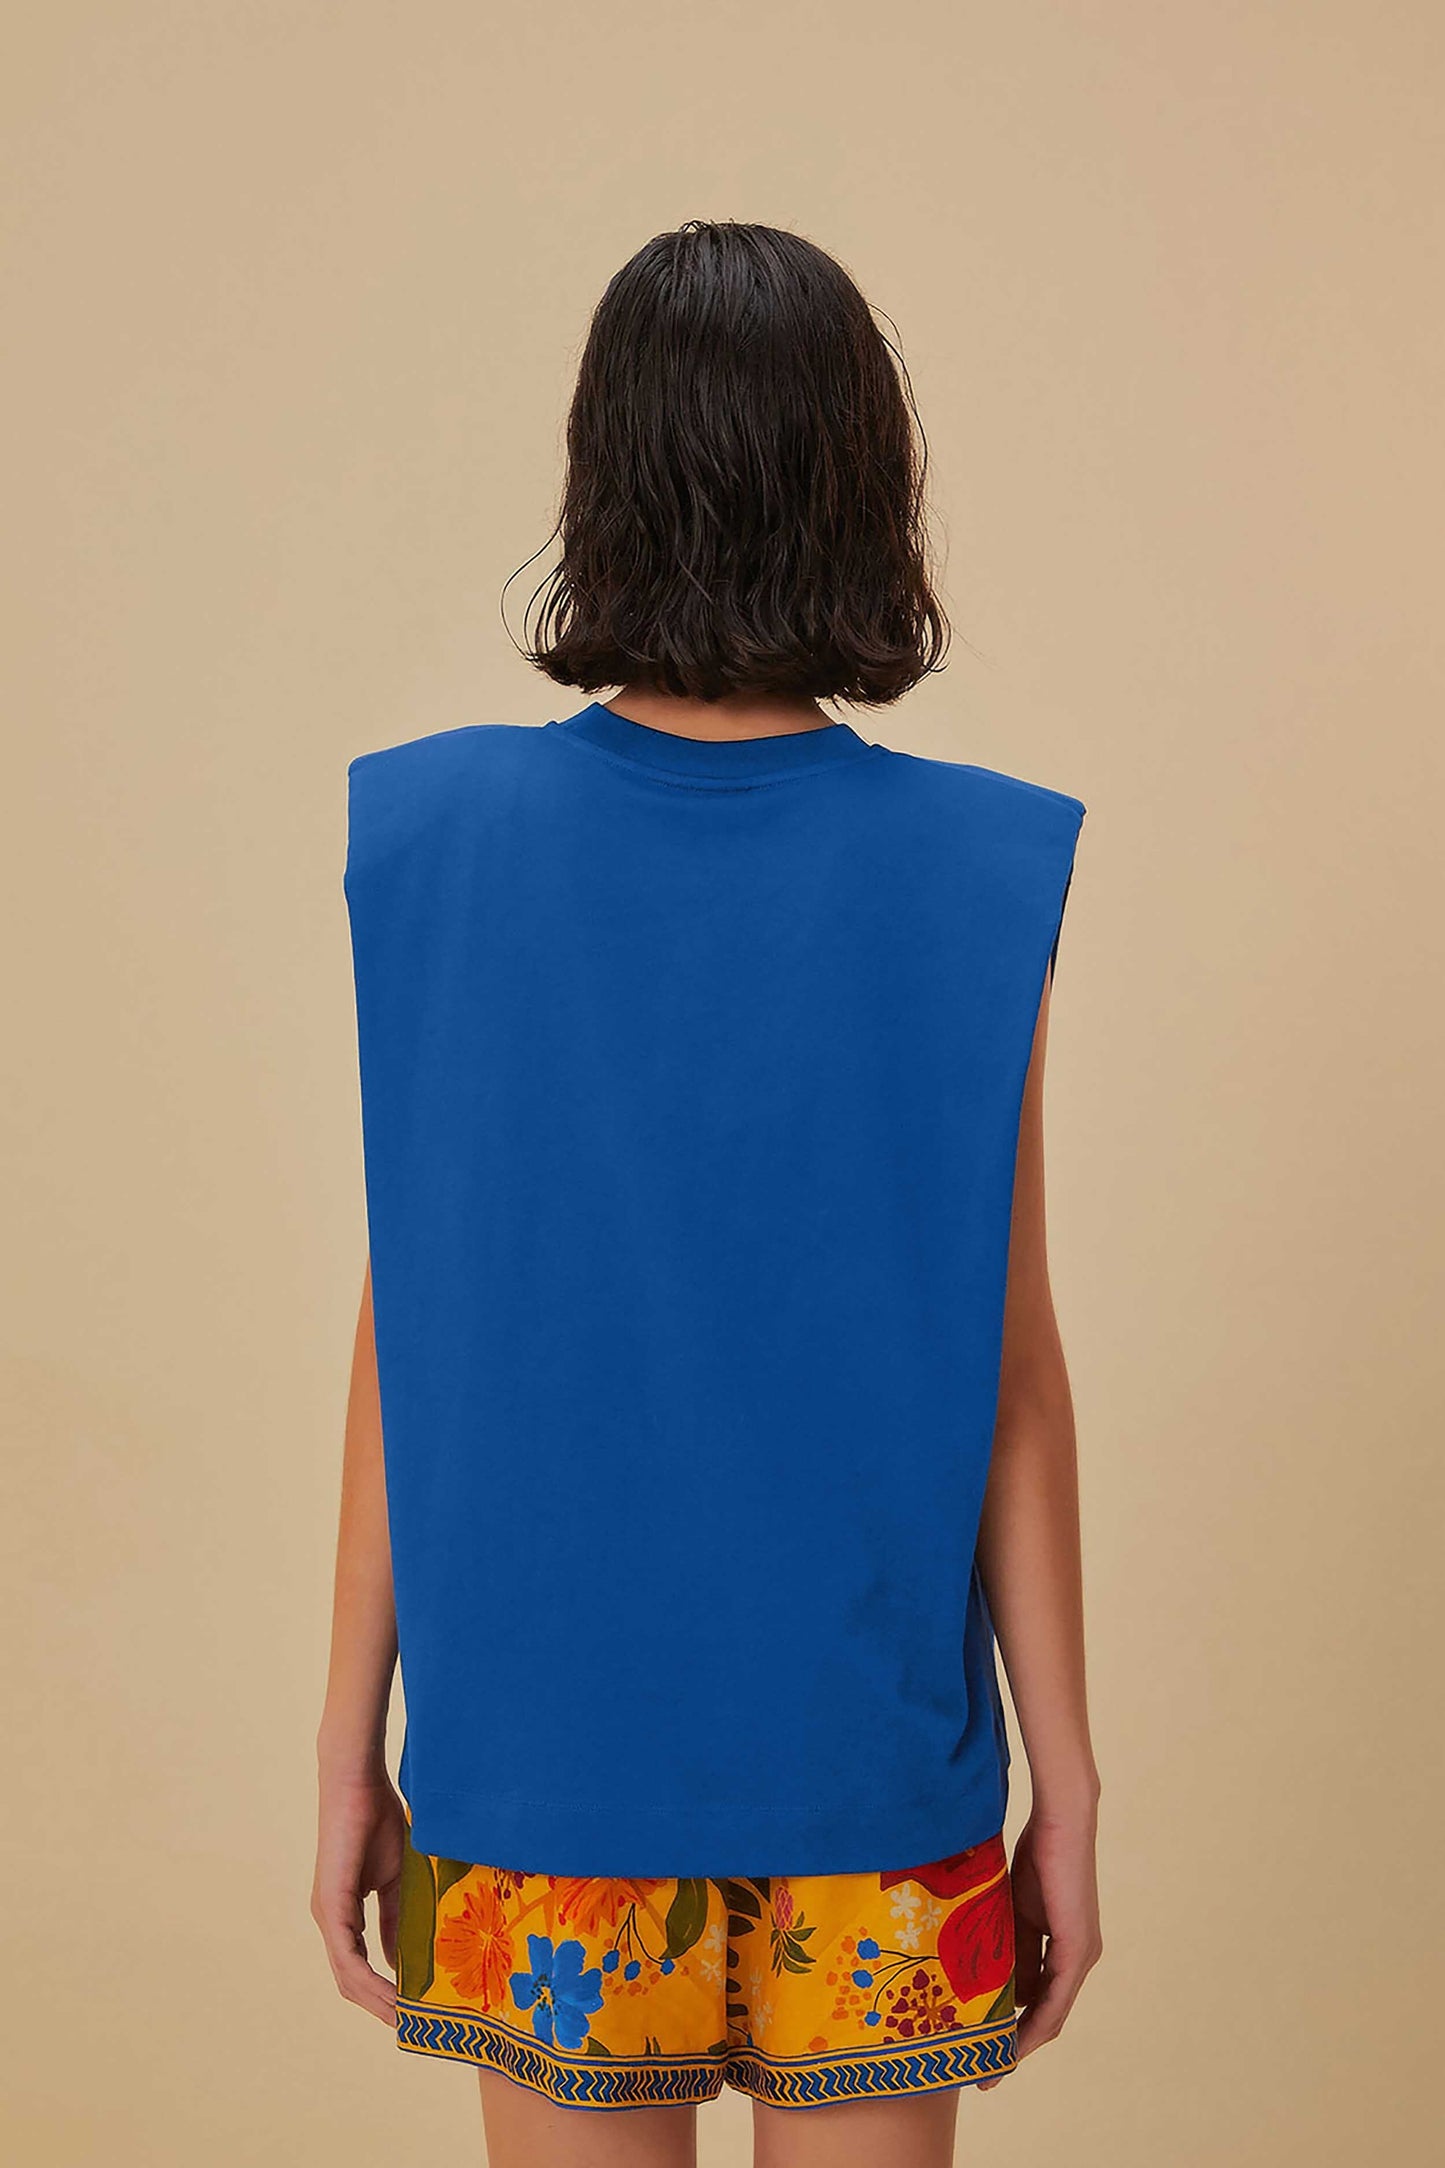 Blue Nature Lovers Shoulder Pad Organic Cotton T-Shirt